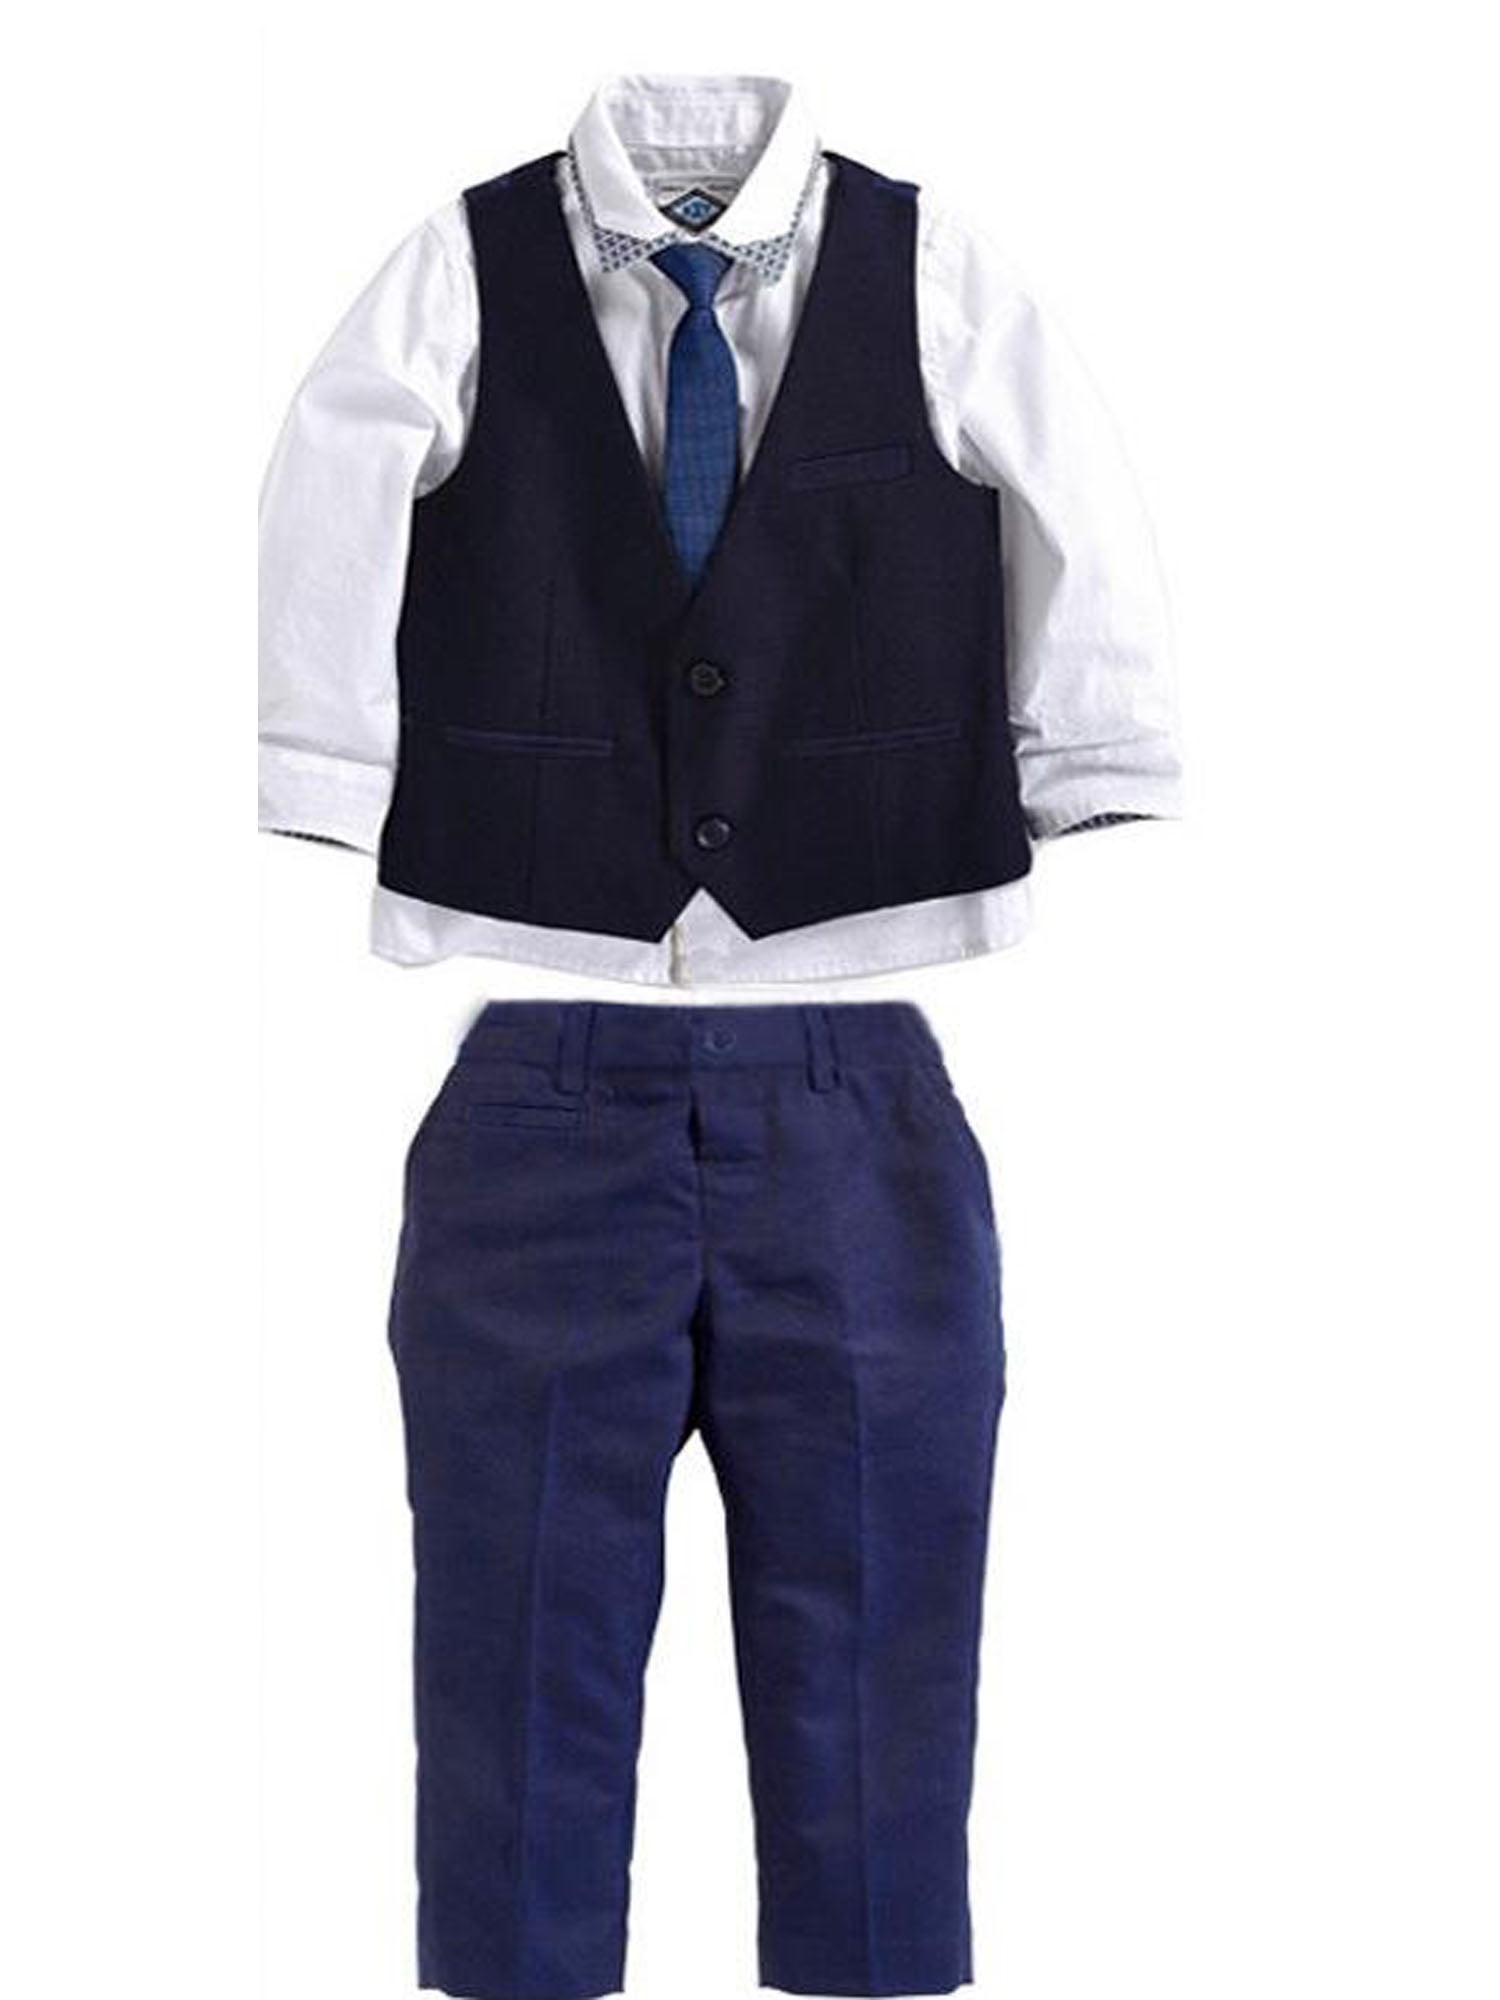 US 4PCS Kid Baby Boy Tuxedo Suit Shirt Waistcoat Tie Pants Formal Outfit Clothes 